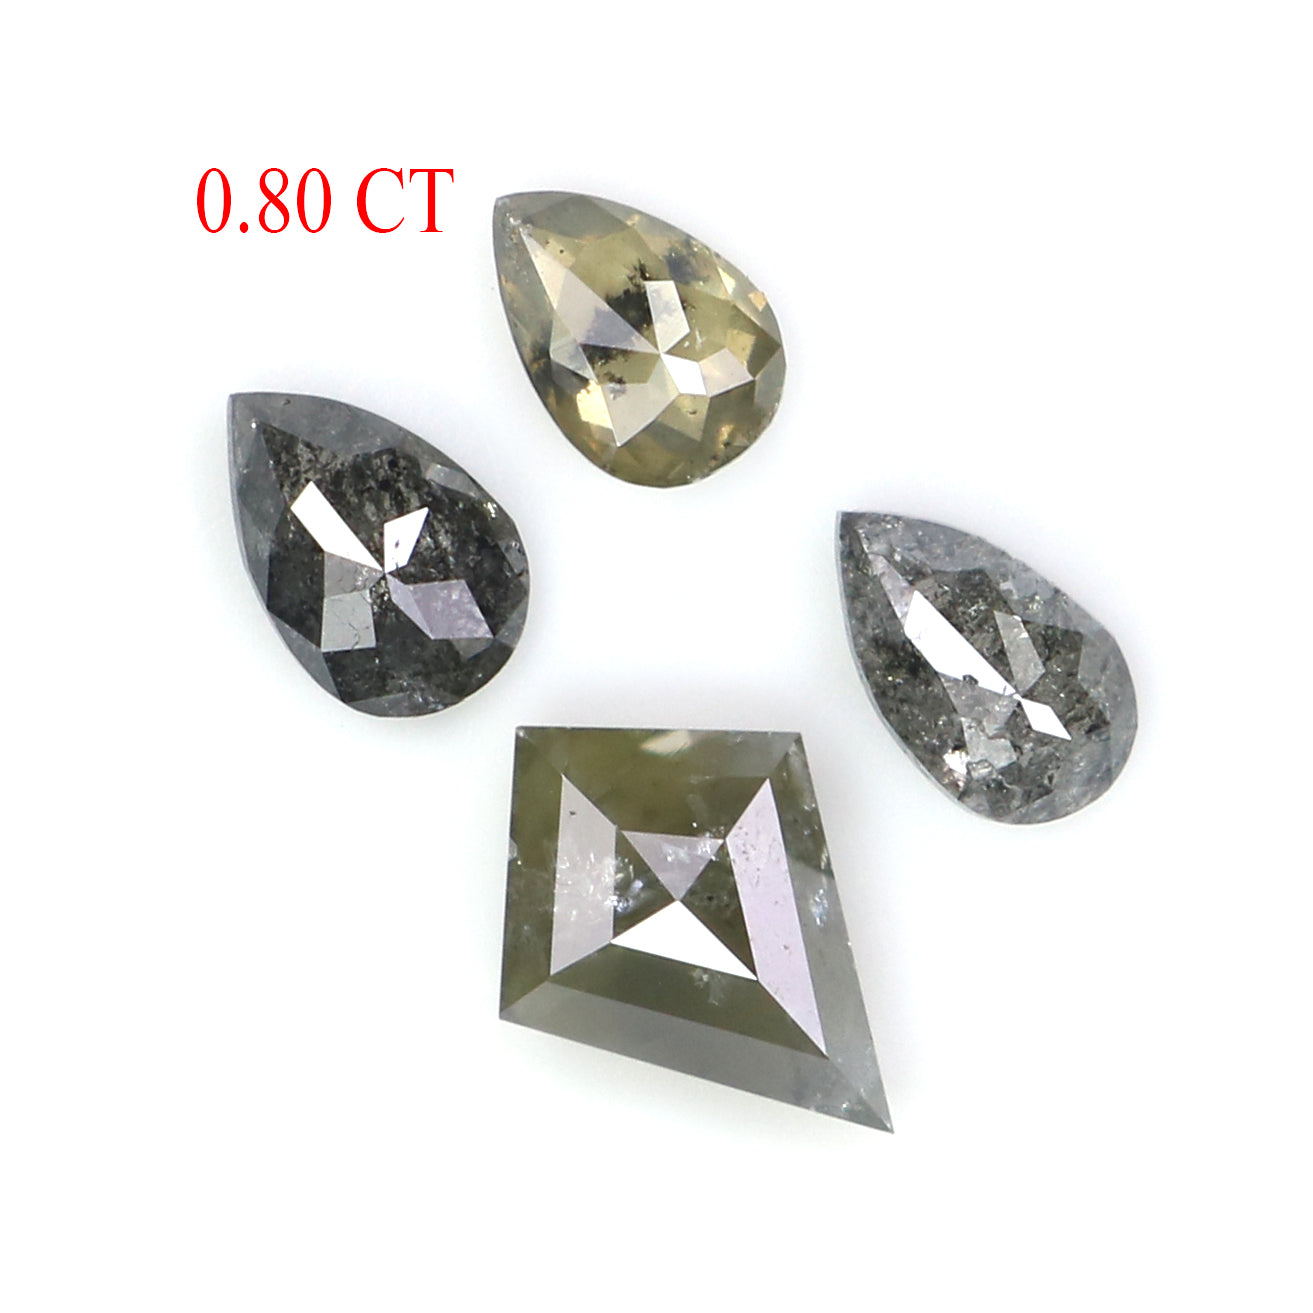 Natural Loose Mix Shape Diamond, Natural Loose Diamond, Salt And Pepper Mix Shape Diamond, Mix Shape Cut Diamond, 0.80 CT Mix Shape L2809